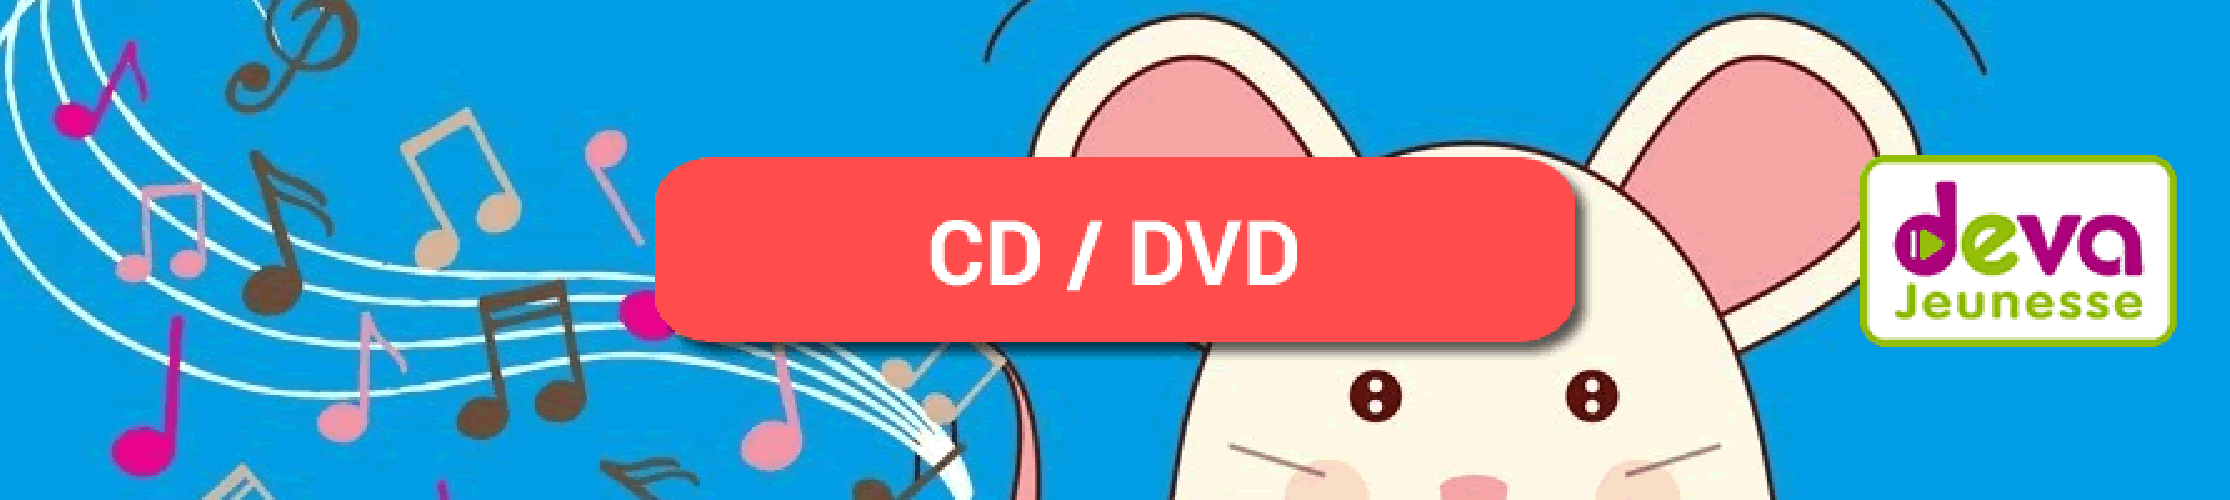  CD/DVD